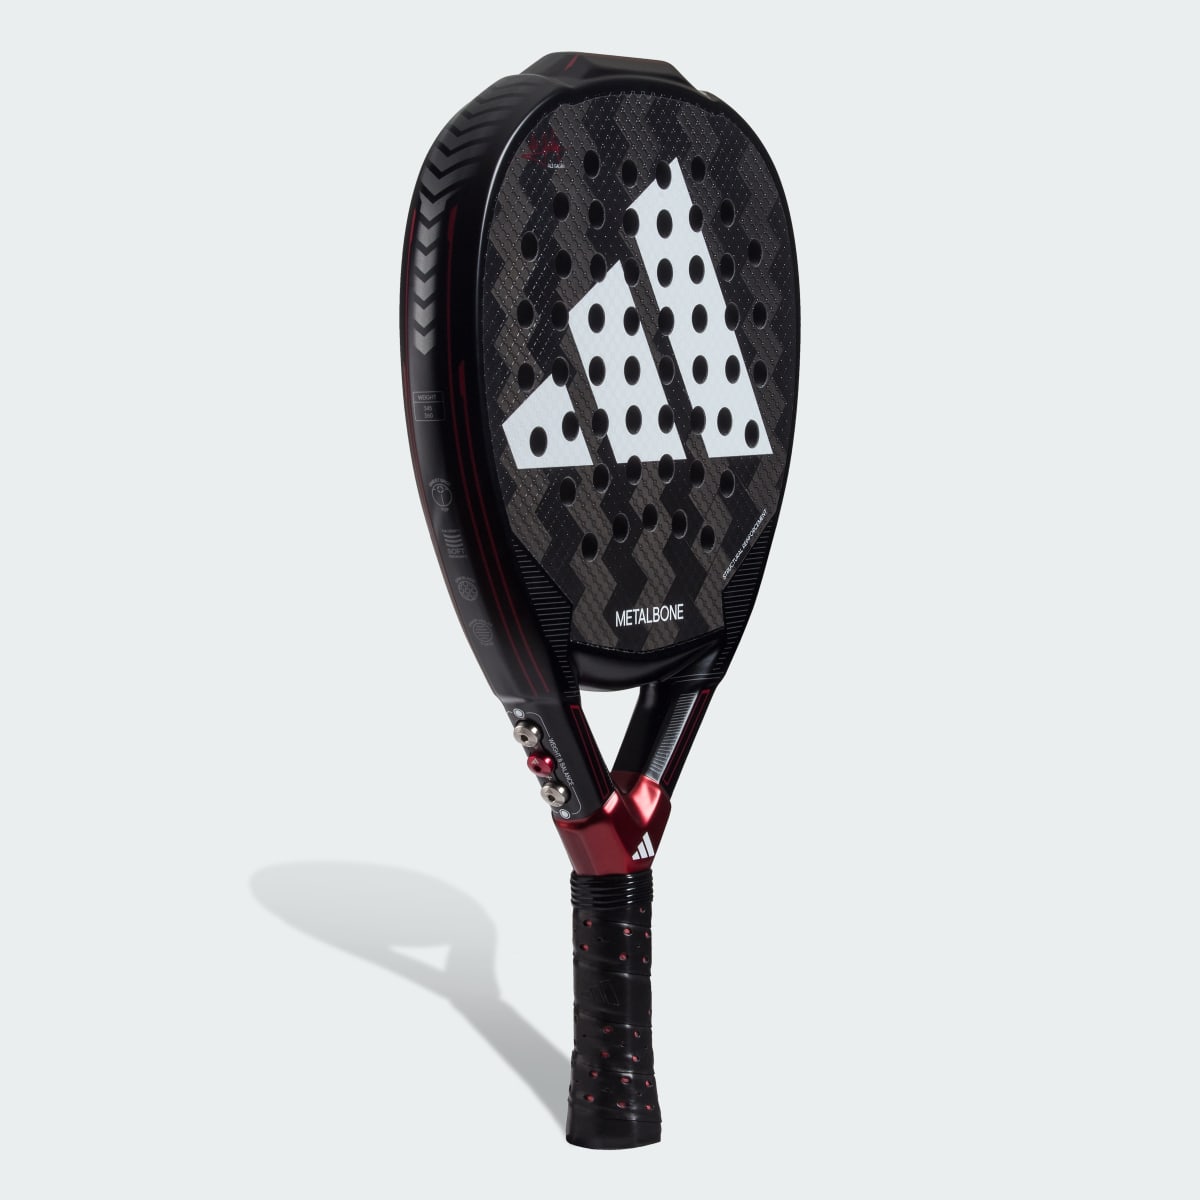 Adidas Metalbone 3.3 Padel Racket. 3